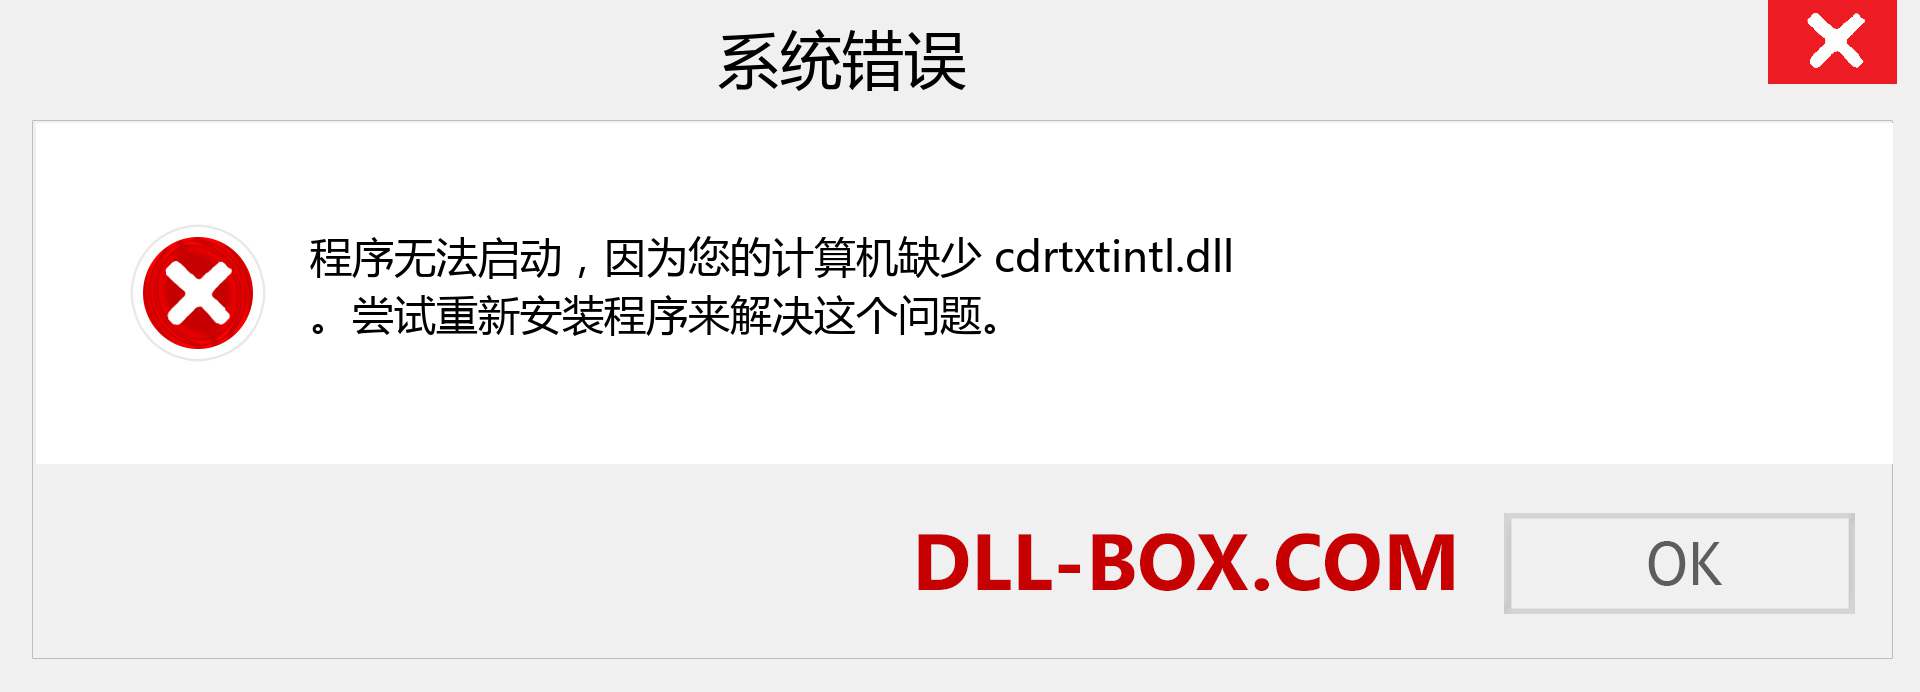 cdrtxtintl.dll 文件丢失？。 适用于 Windows 7、8、10 的下载 - 修复 Windows、照片、图像上的 cdrtxtintl dll 丢失错误